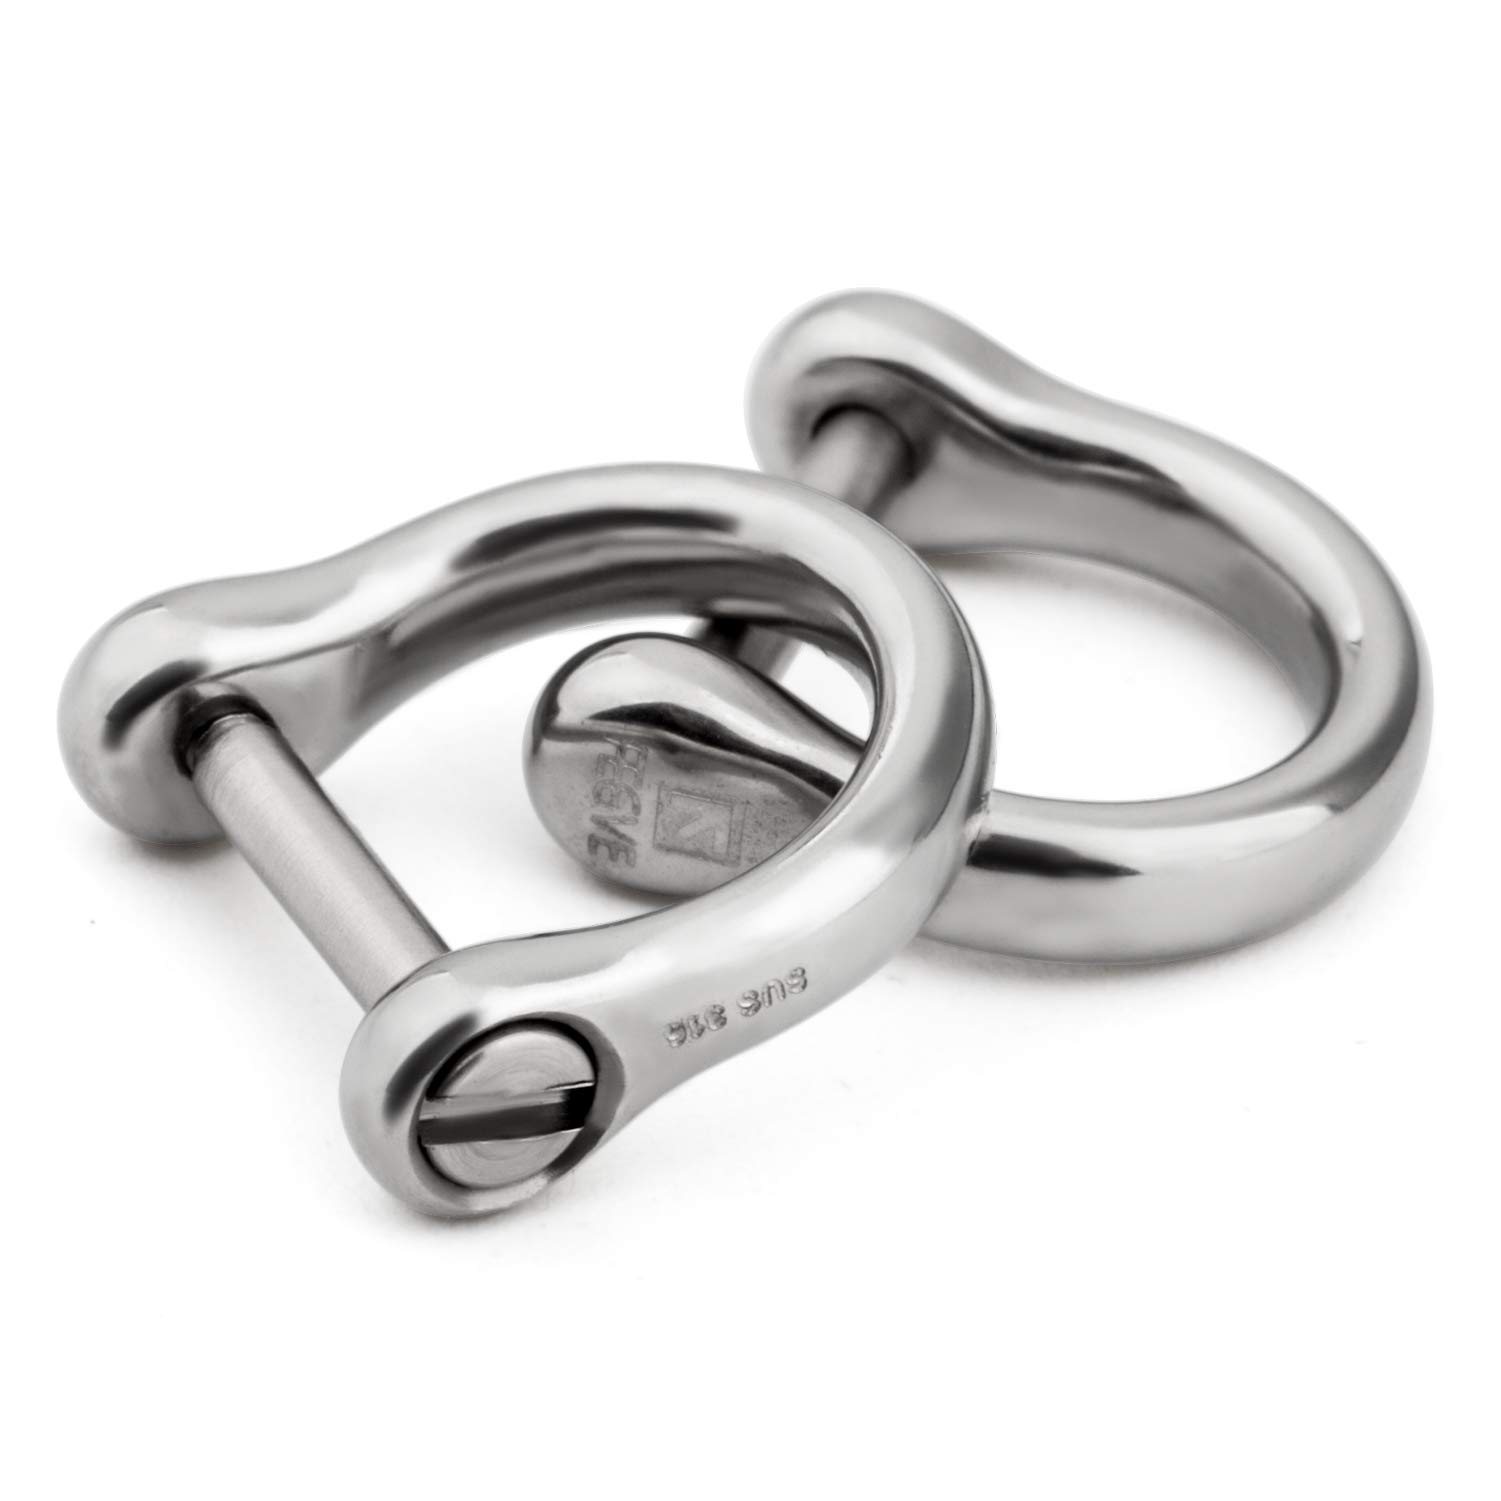 TISUR Titanium Round Carabiner Clip,Spring Hook Key Ring,Small